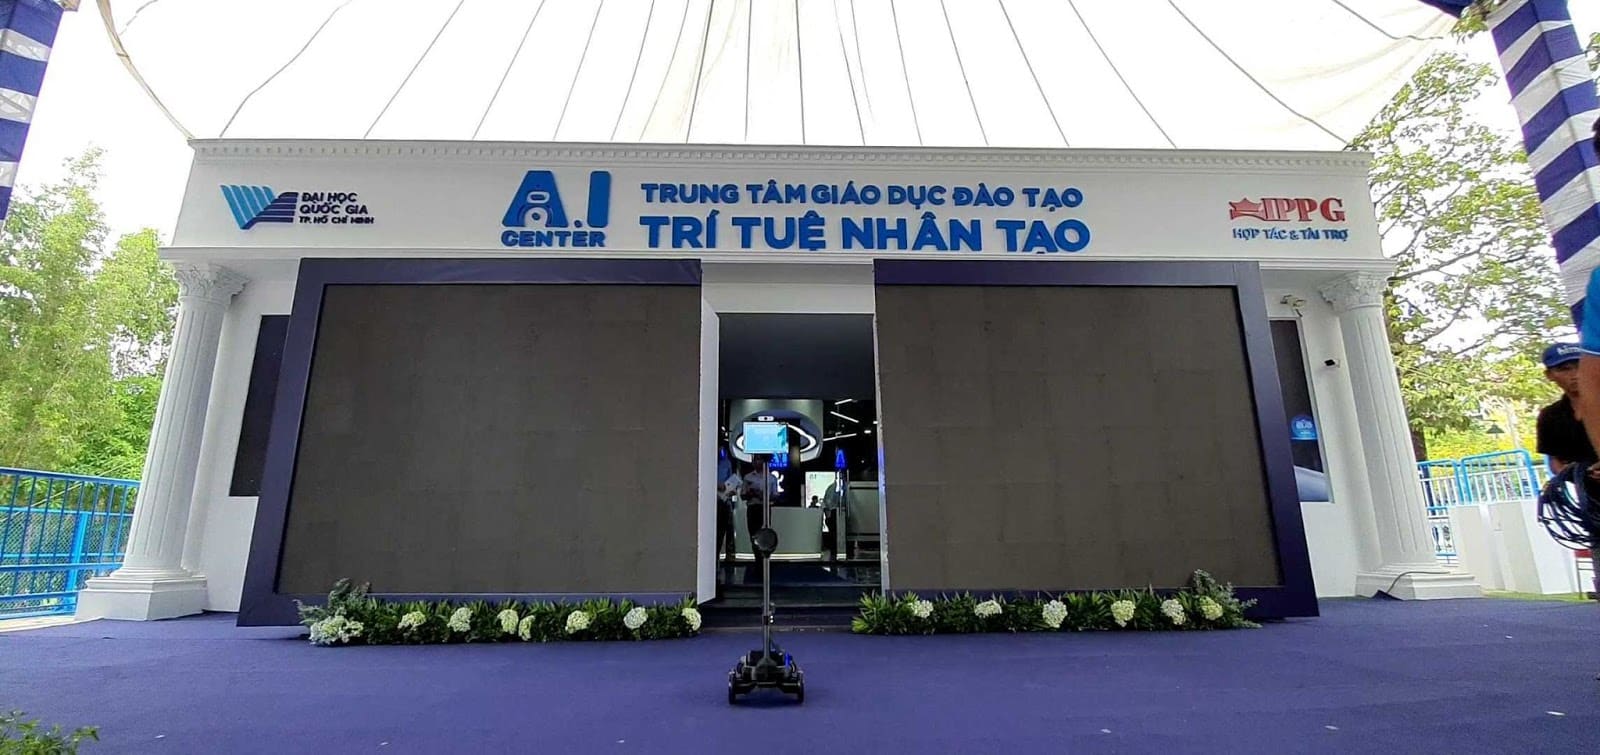 Ohmni Robot in front of the Vietnam AI & Robotics Training Program